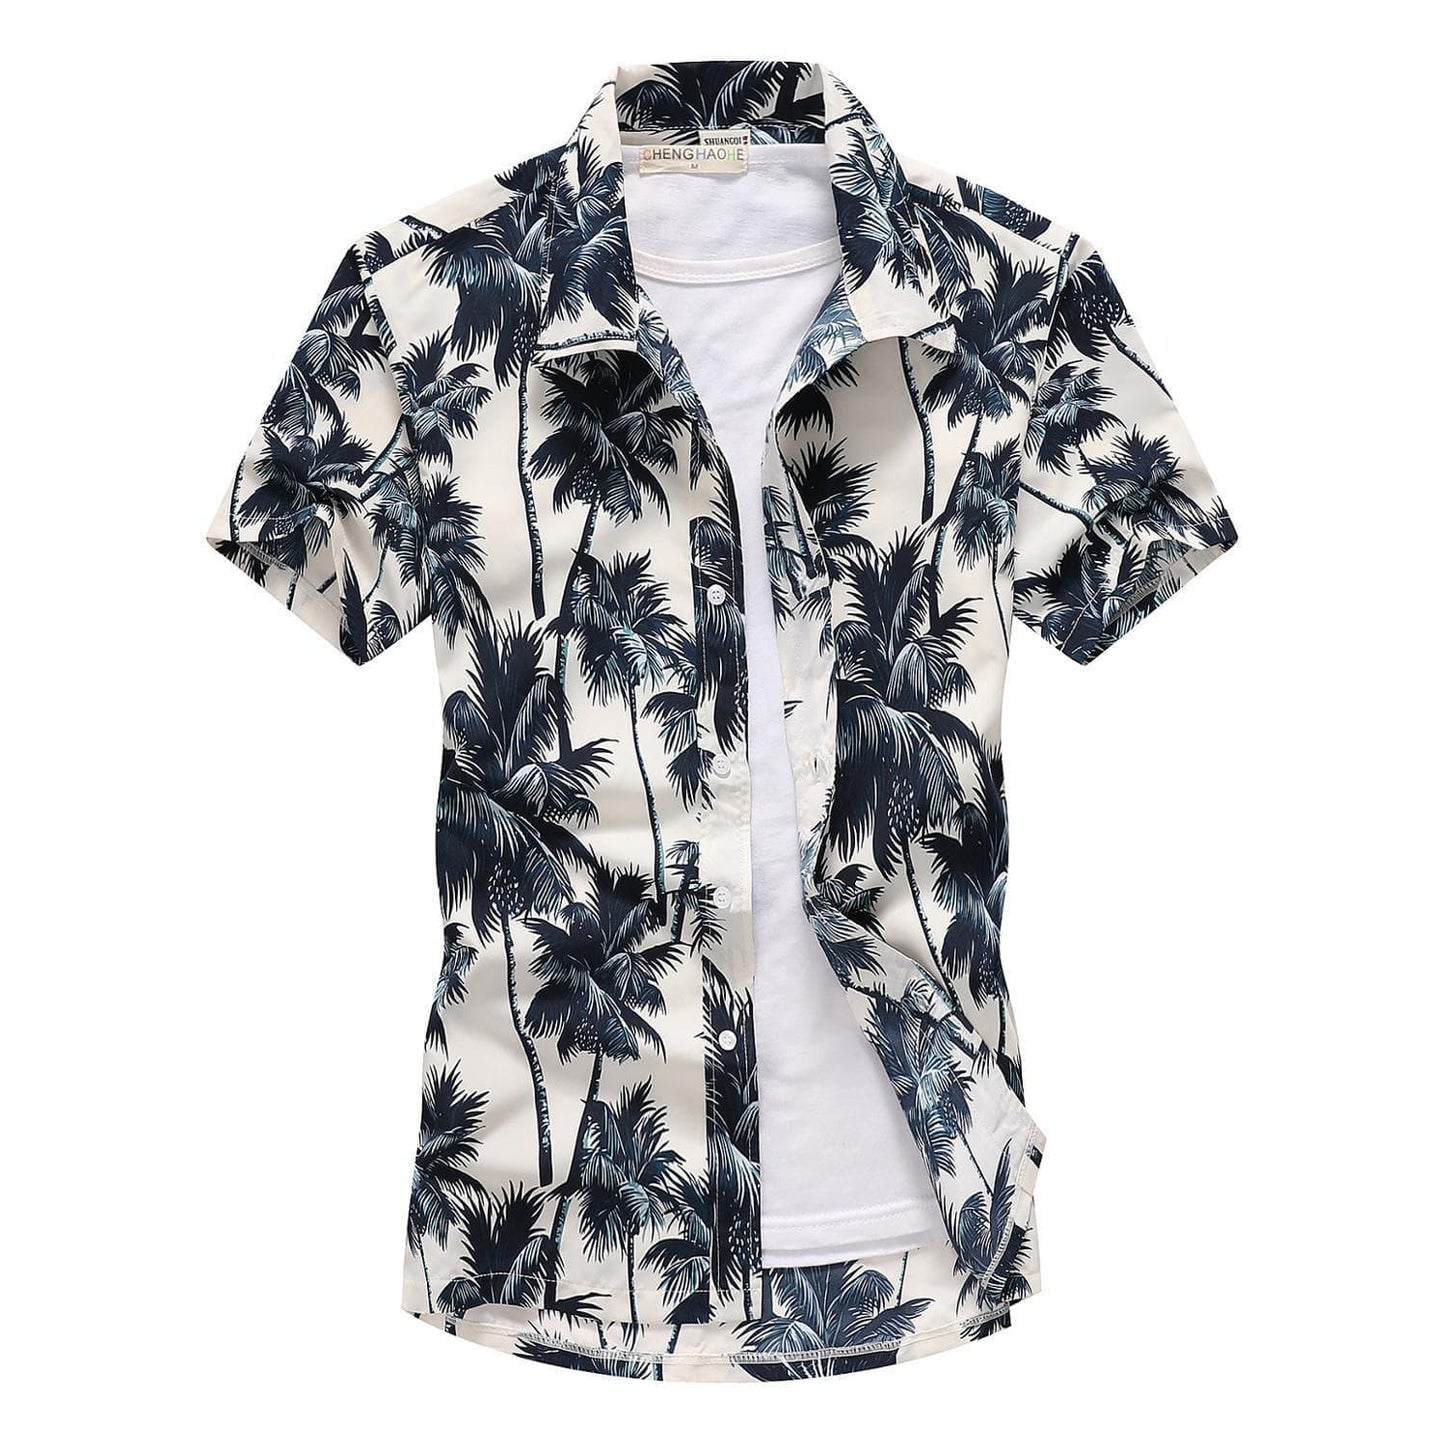 ezy2find shirts 2019 Fashion Mens Short Sleeve Hawaiian Shirt Fast drying Plus Size